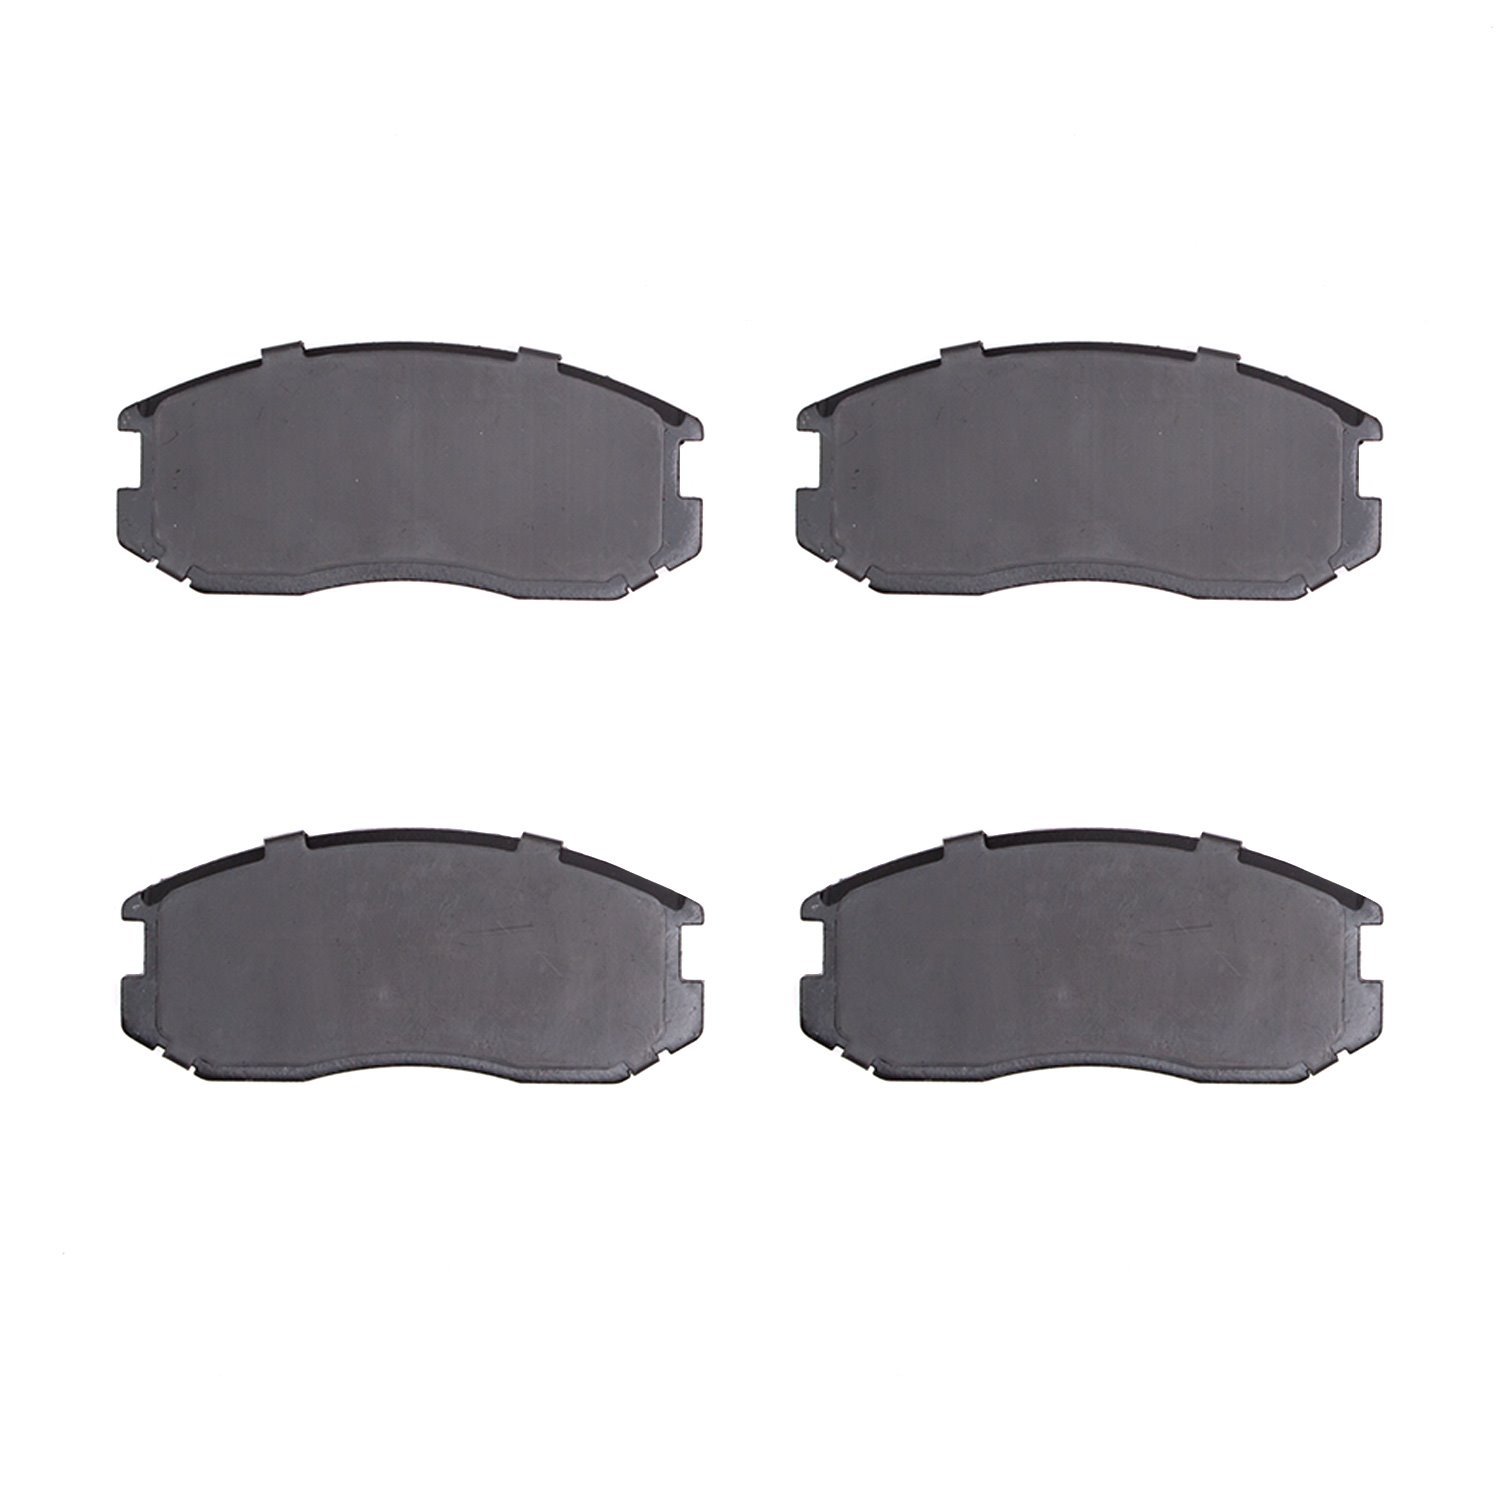 1310-0602-00 3000-Series Ceramic Brake Pads, 1991-2000 Multiple Makes/Models, Position: Front